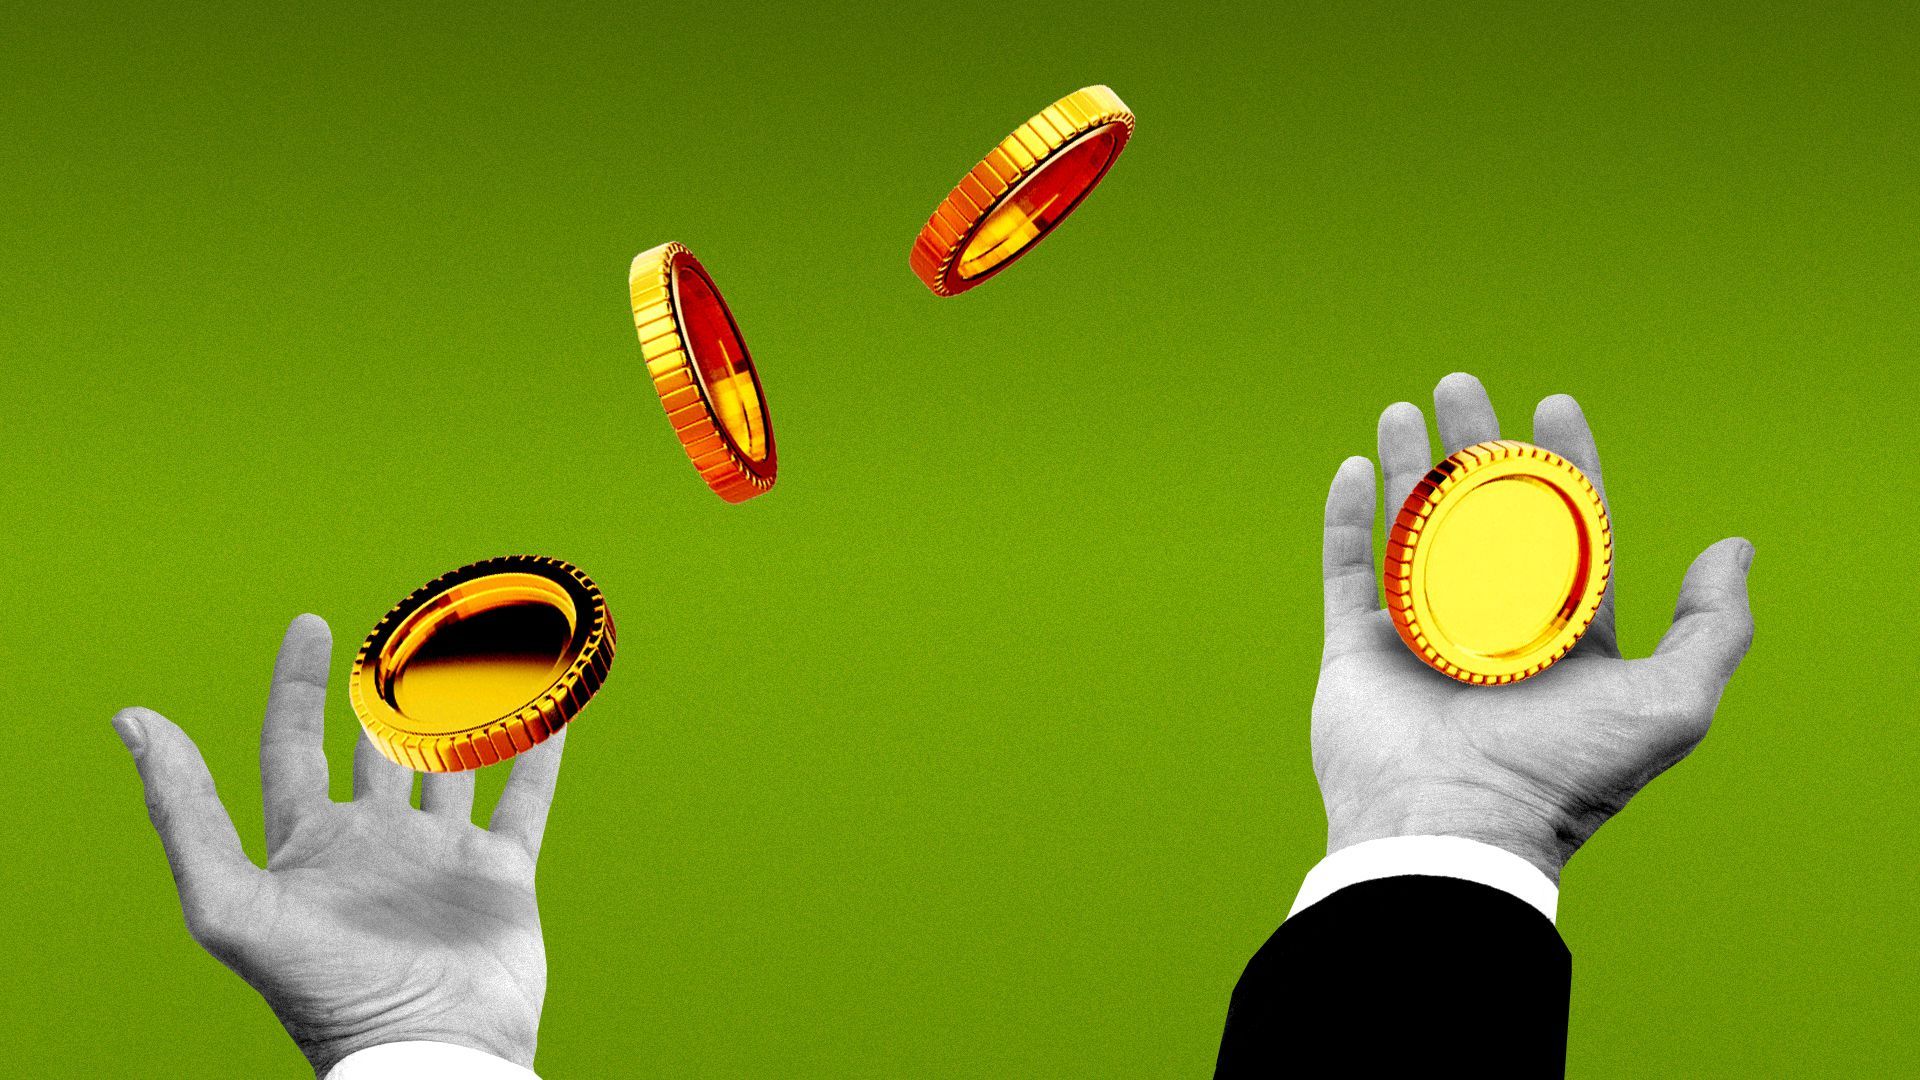 Illustration of two hands juggling large golden coins